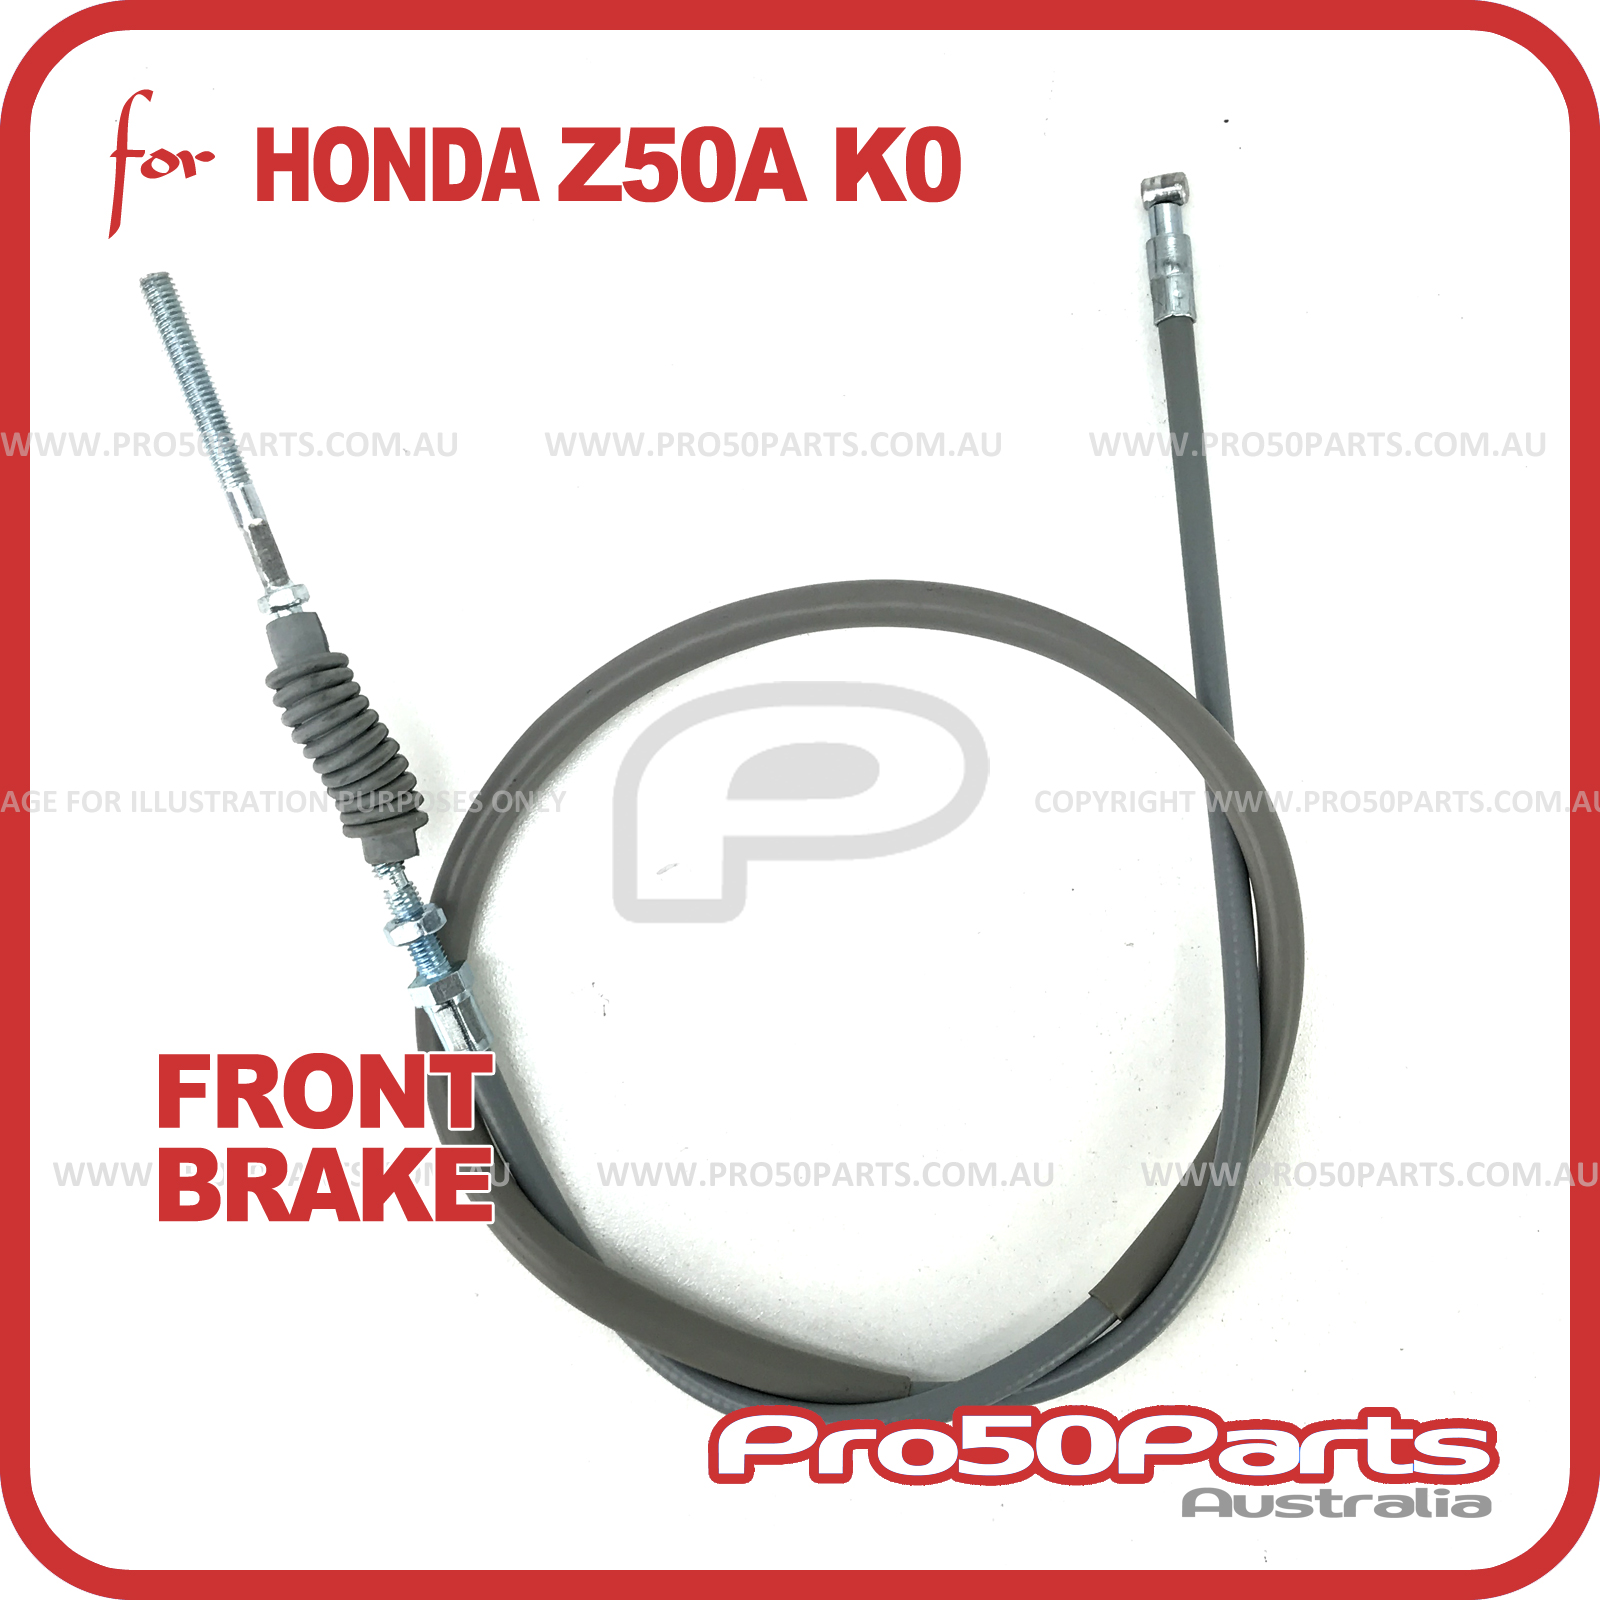 Honda Z 50 K Monkey Cable Front Brake Reproduktion New 77cm 